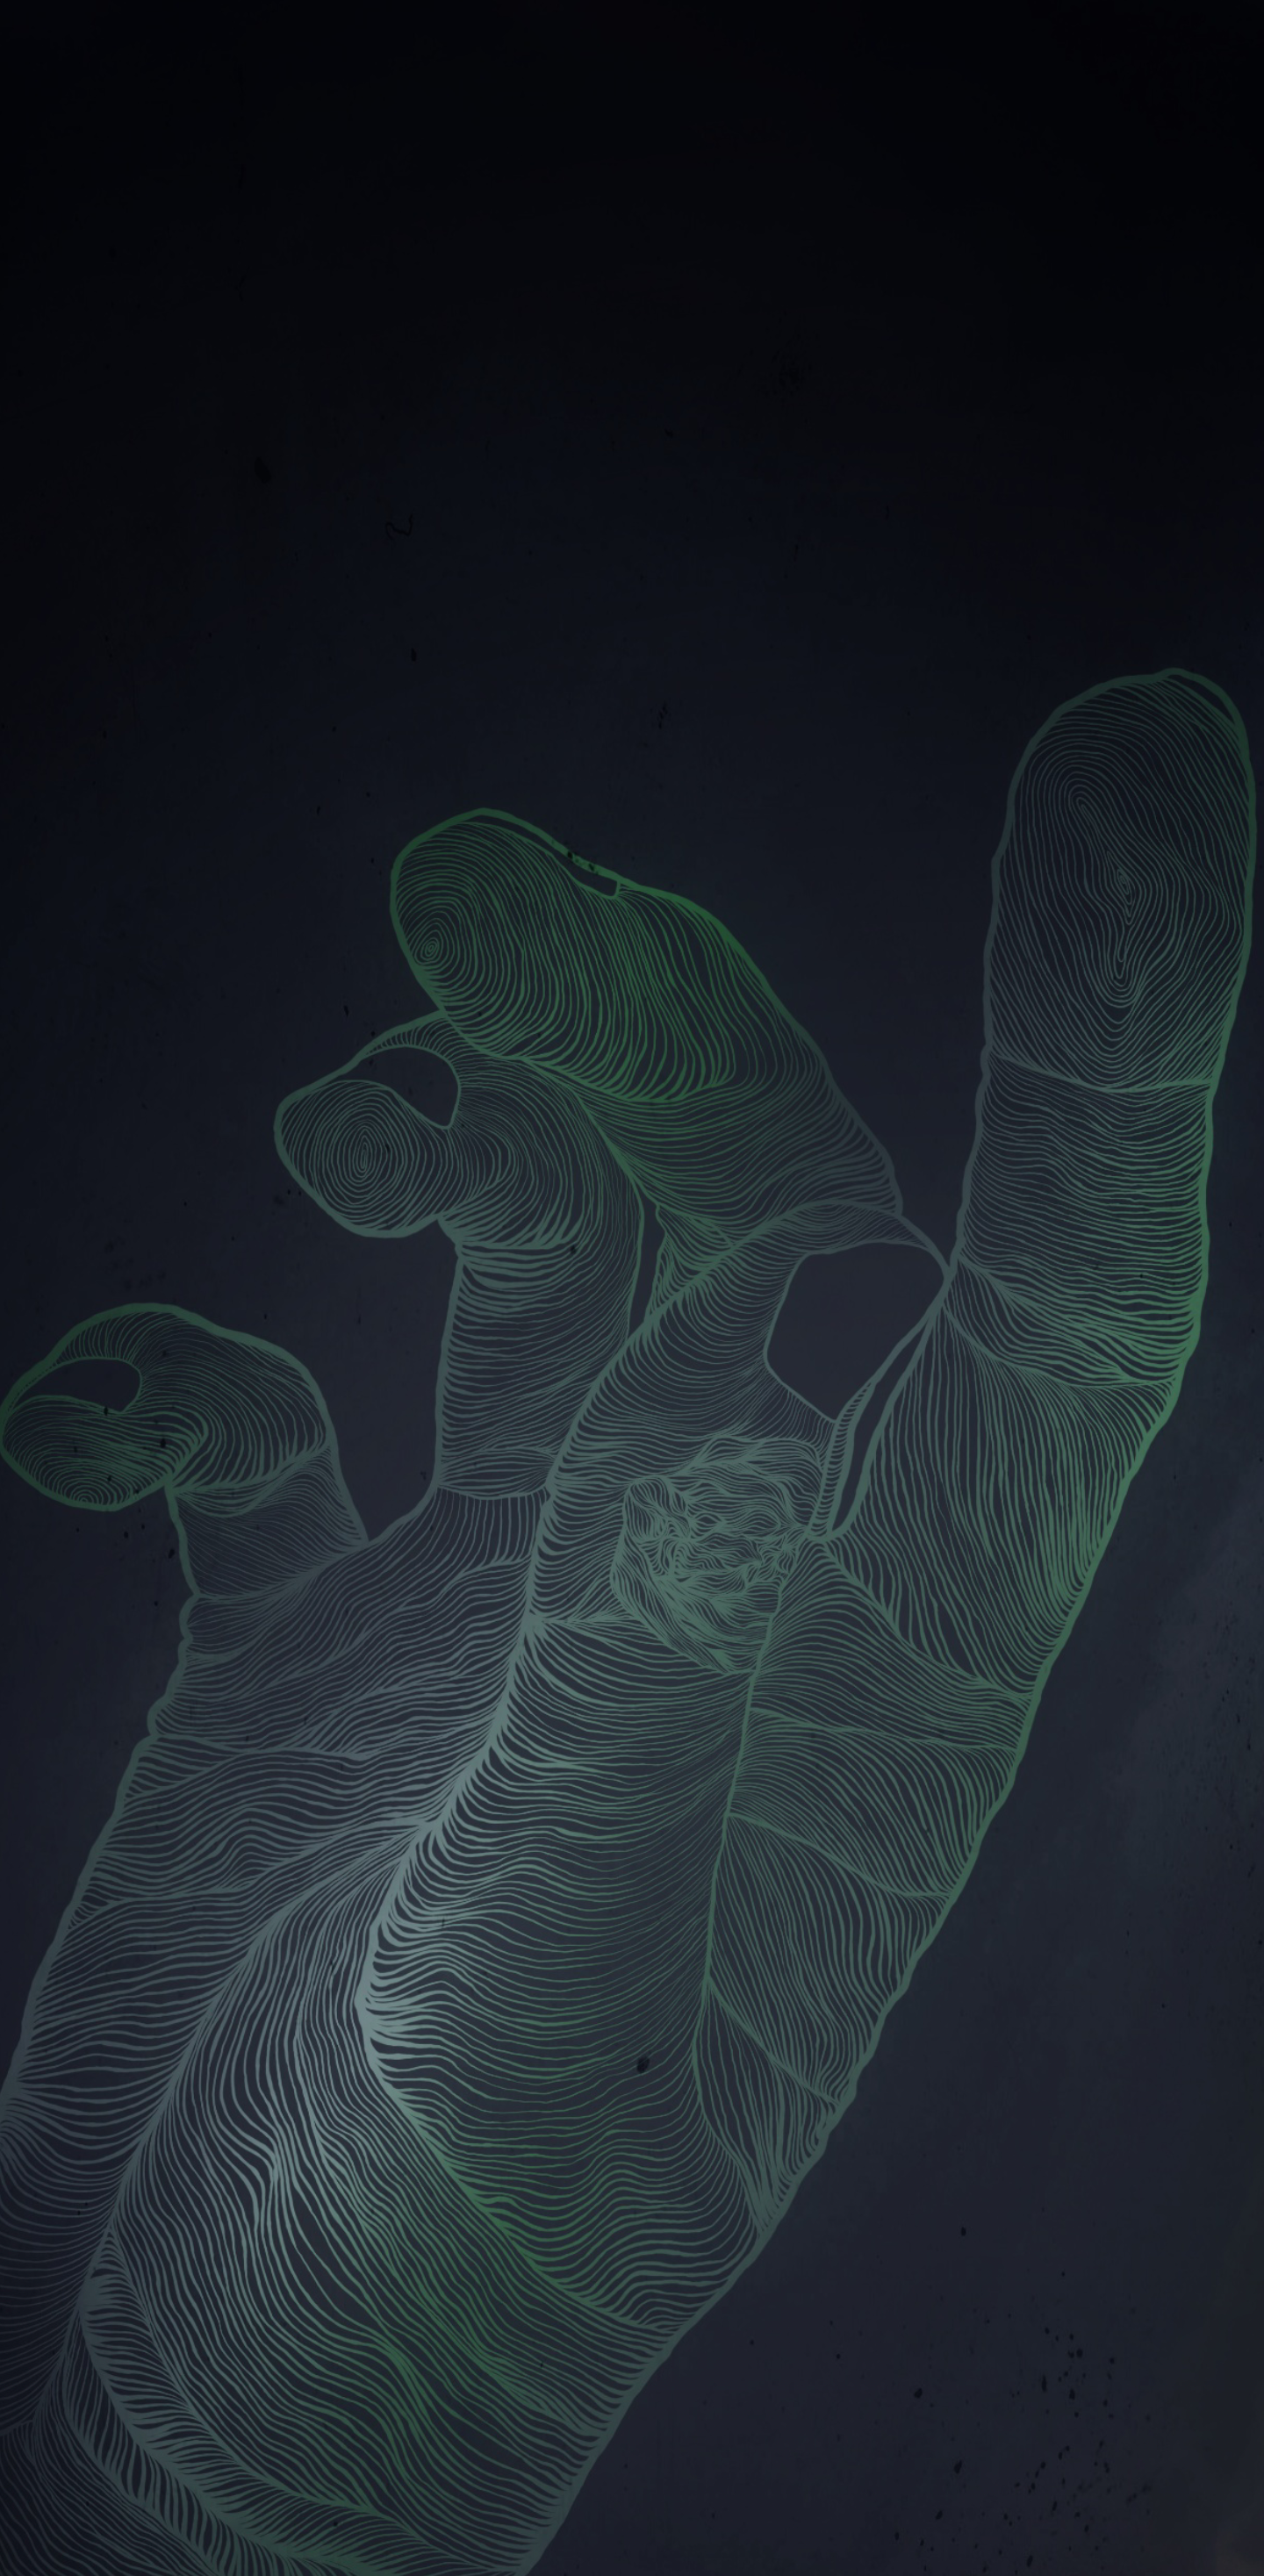 General 1440x2935 digital art minimalism hands portrait display simple background line art fingers